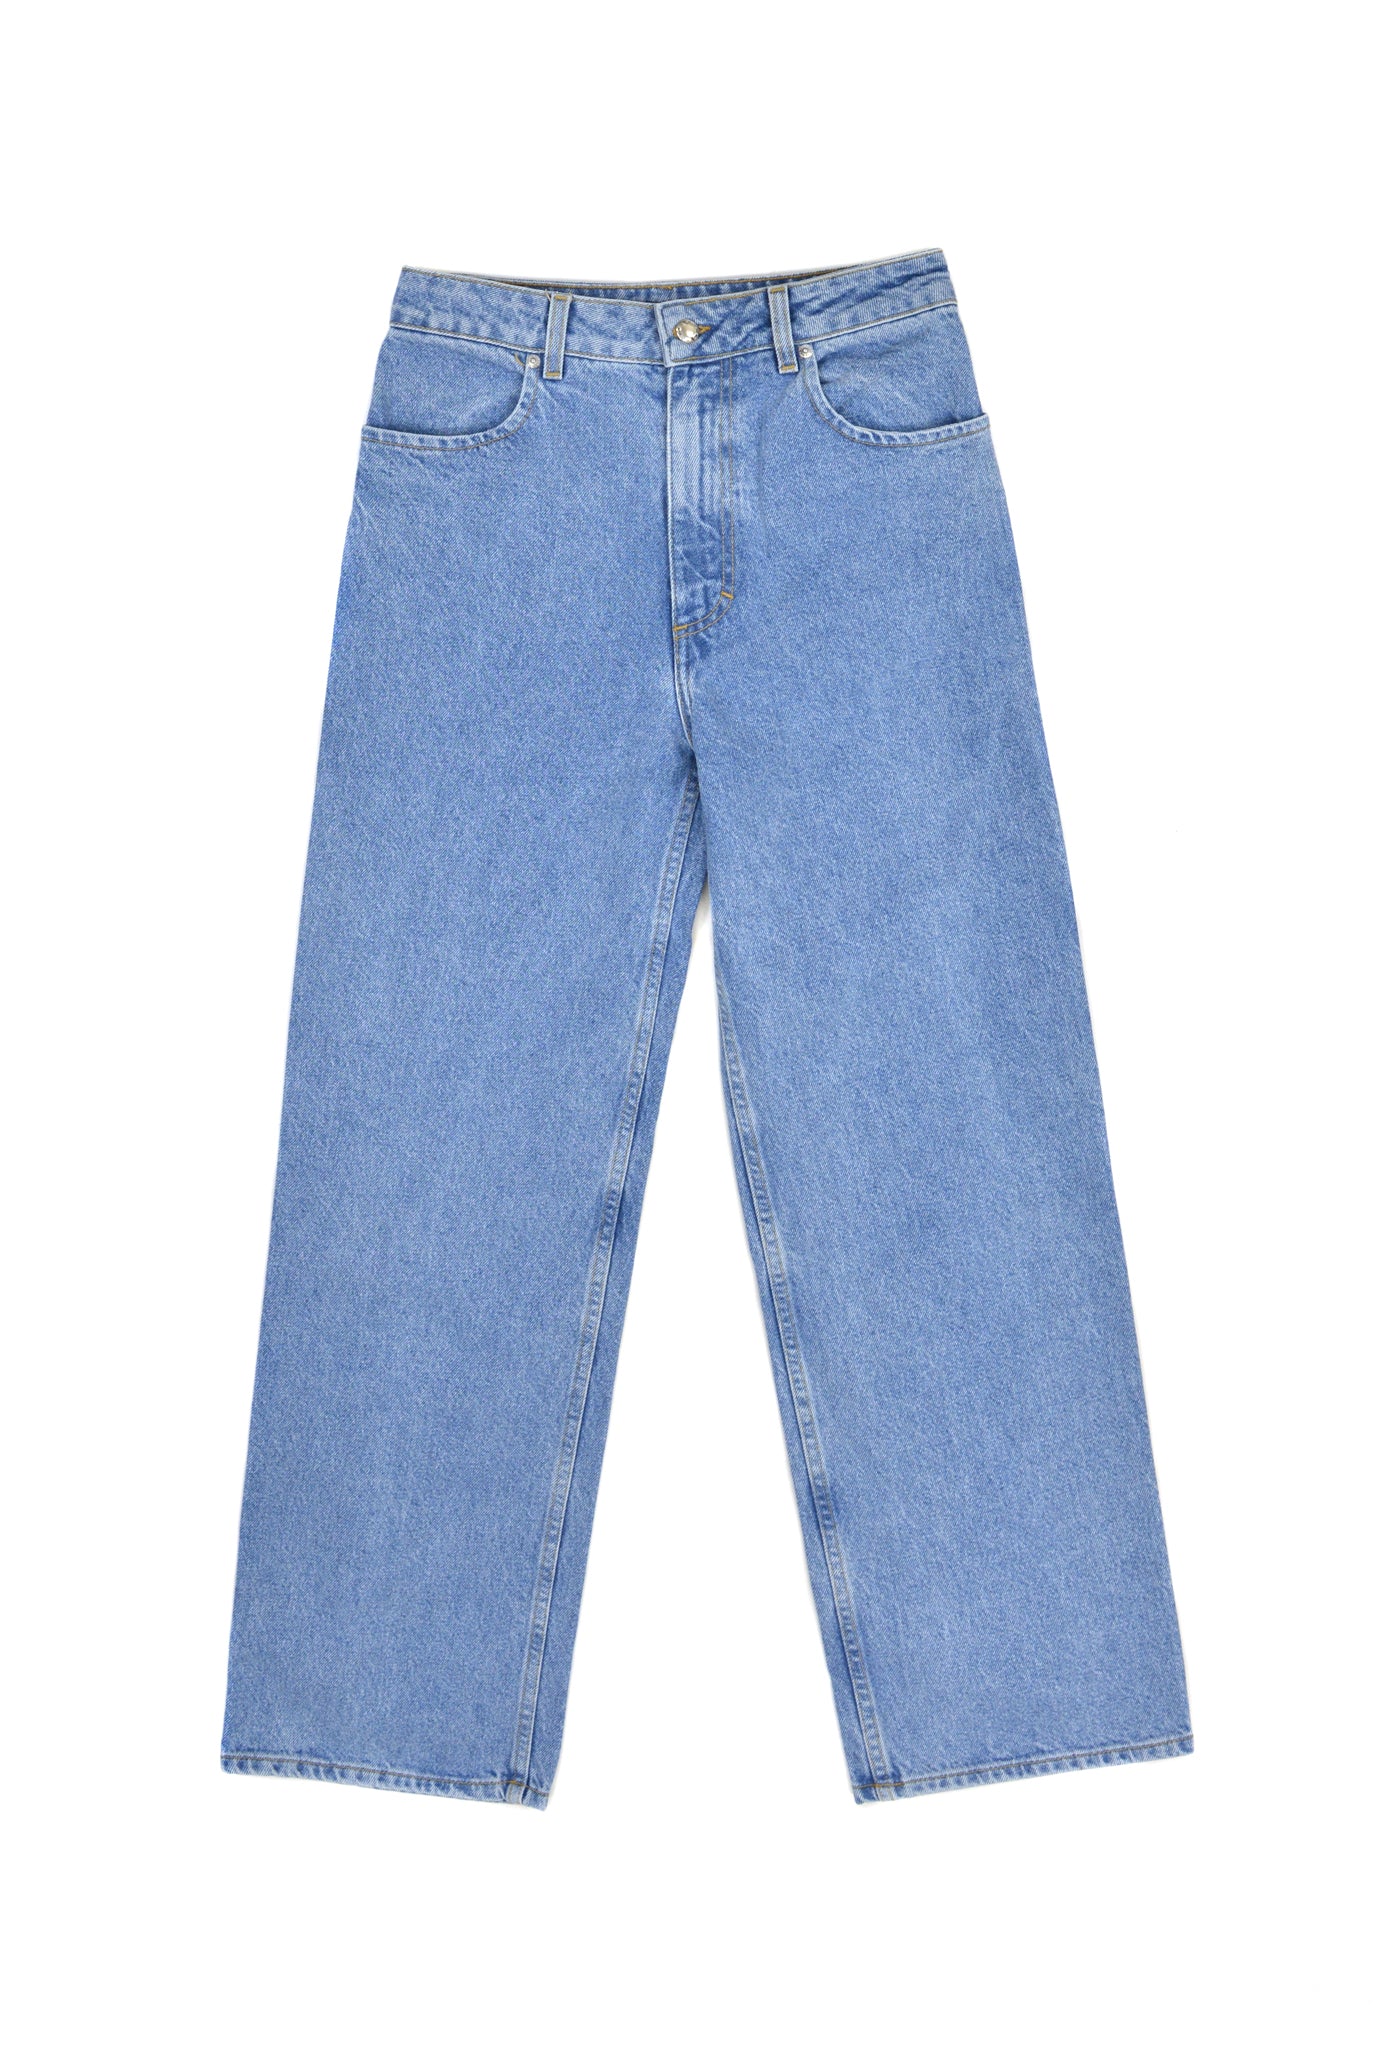 Blue jeans, Wide Leg Light Blue, Official website